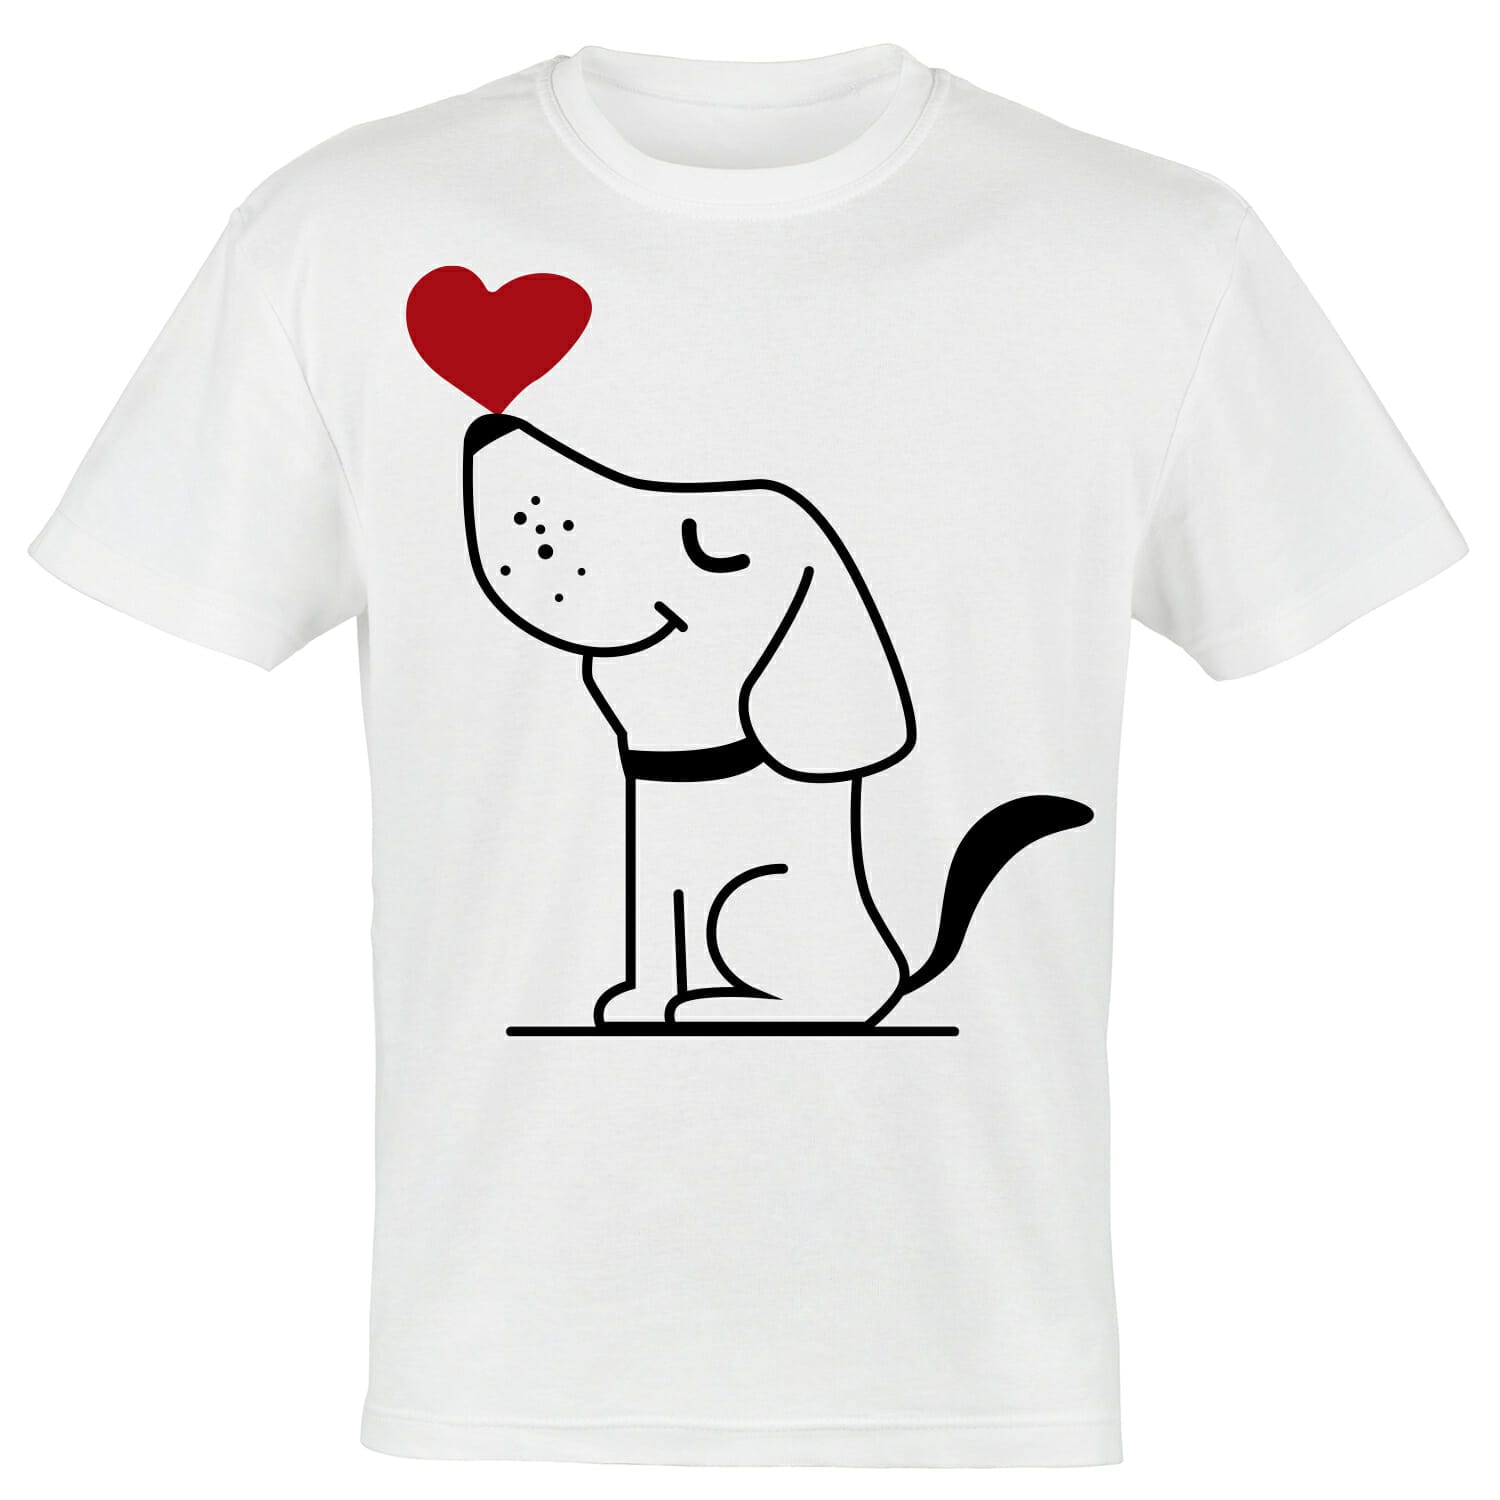 cute dog with a heart T-shirt design